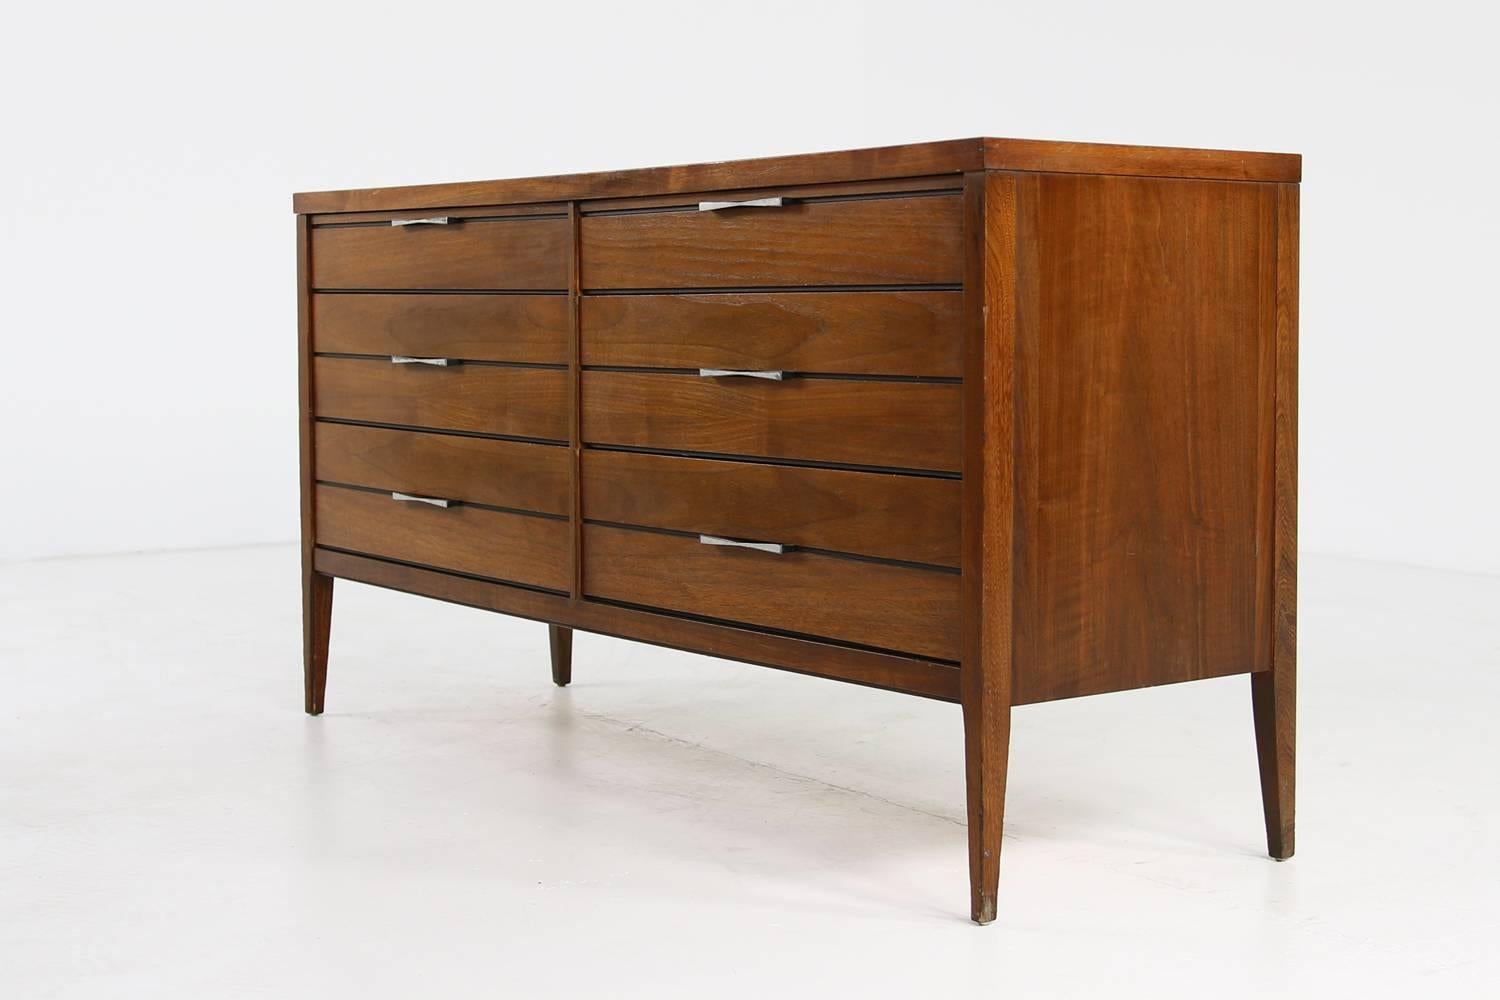 Danish 1950s American Walnut Sideboard, Chest of Six Drawers, Mid-Century Modern Design